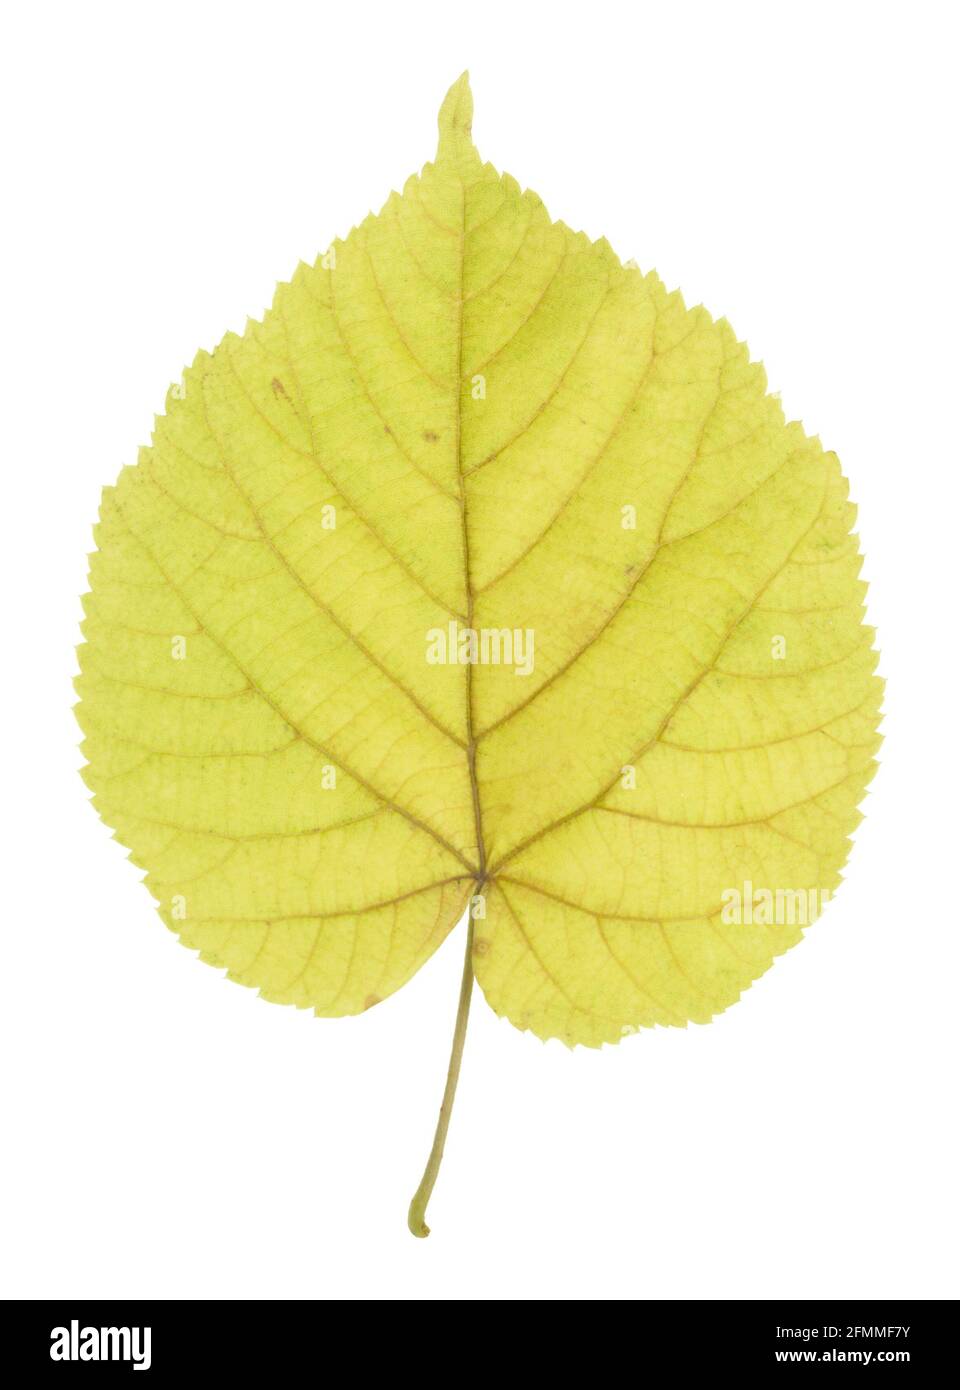 Tilia, hoja de chordata en otoño, de cal de hoja pequeña, aislada sobre fondo blanco Foto de stock